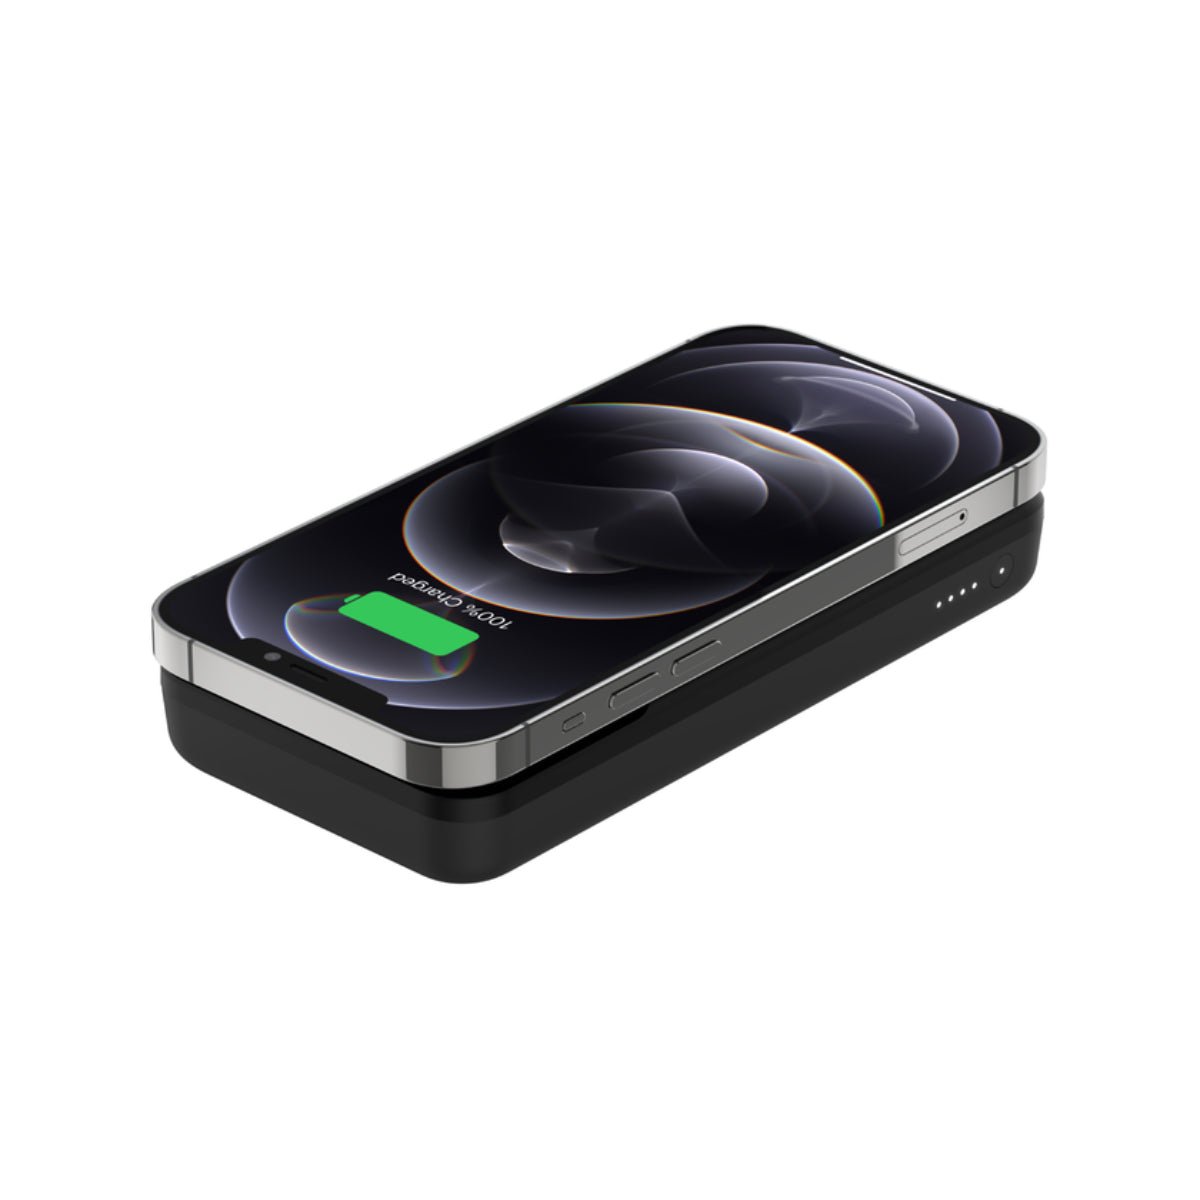 Belkin 10,000 mAh Magnetic Portable Wireless Charger - Black - مزود طاقة - Store 974 | ستور ٩٧٤